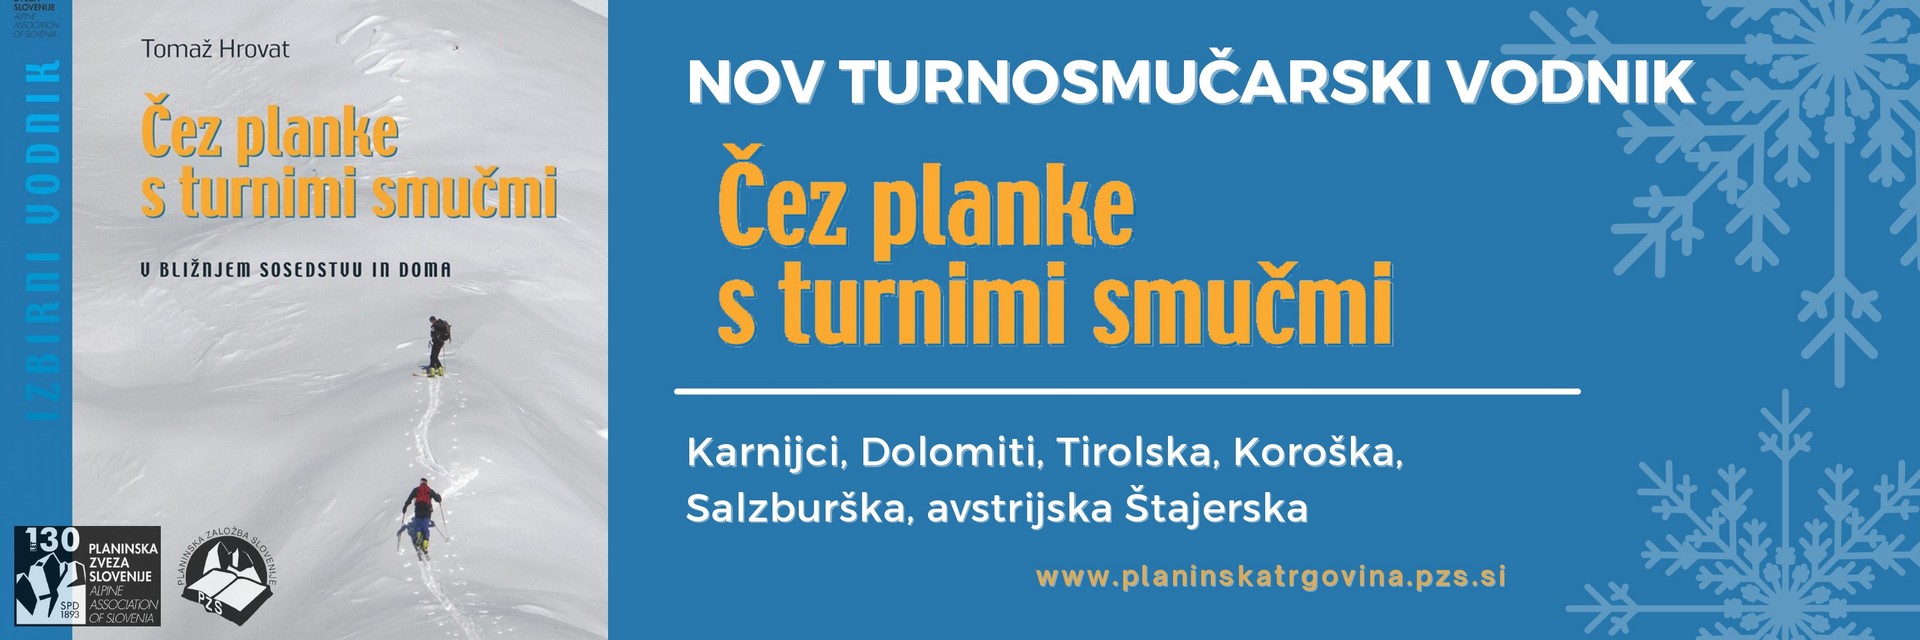 cez_planke_s_turnimi_smucmi_pasica